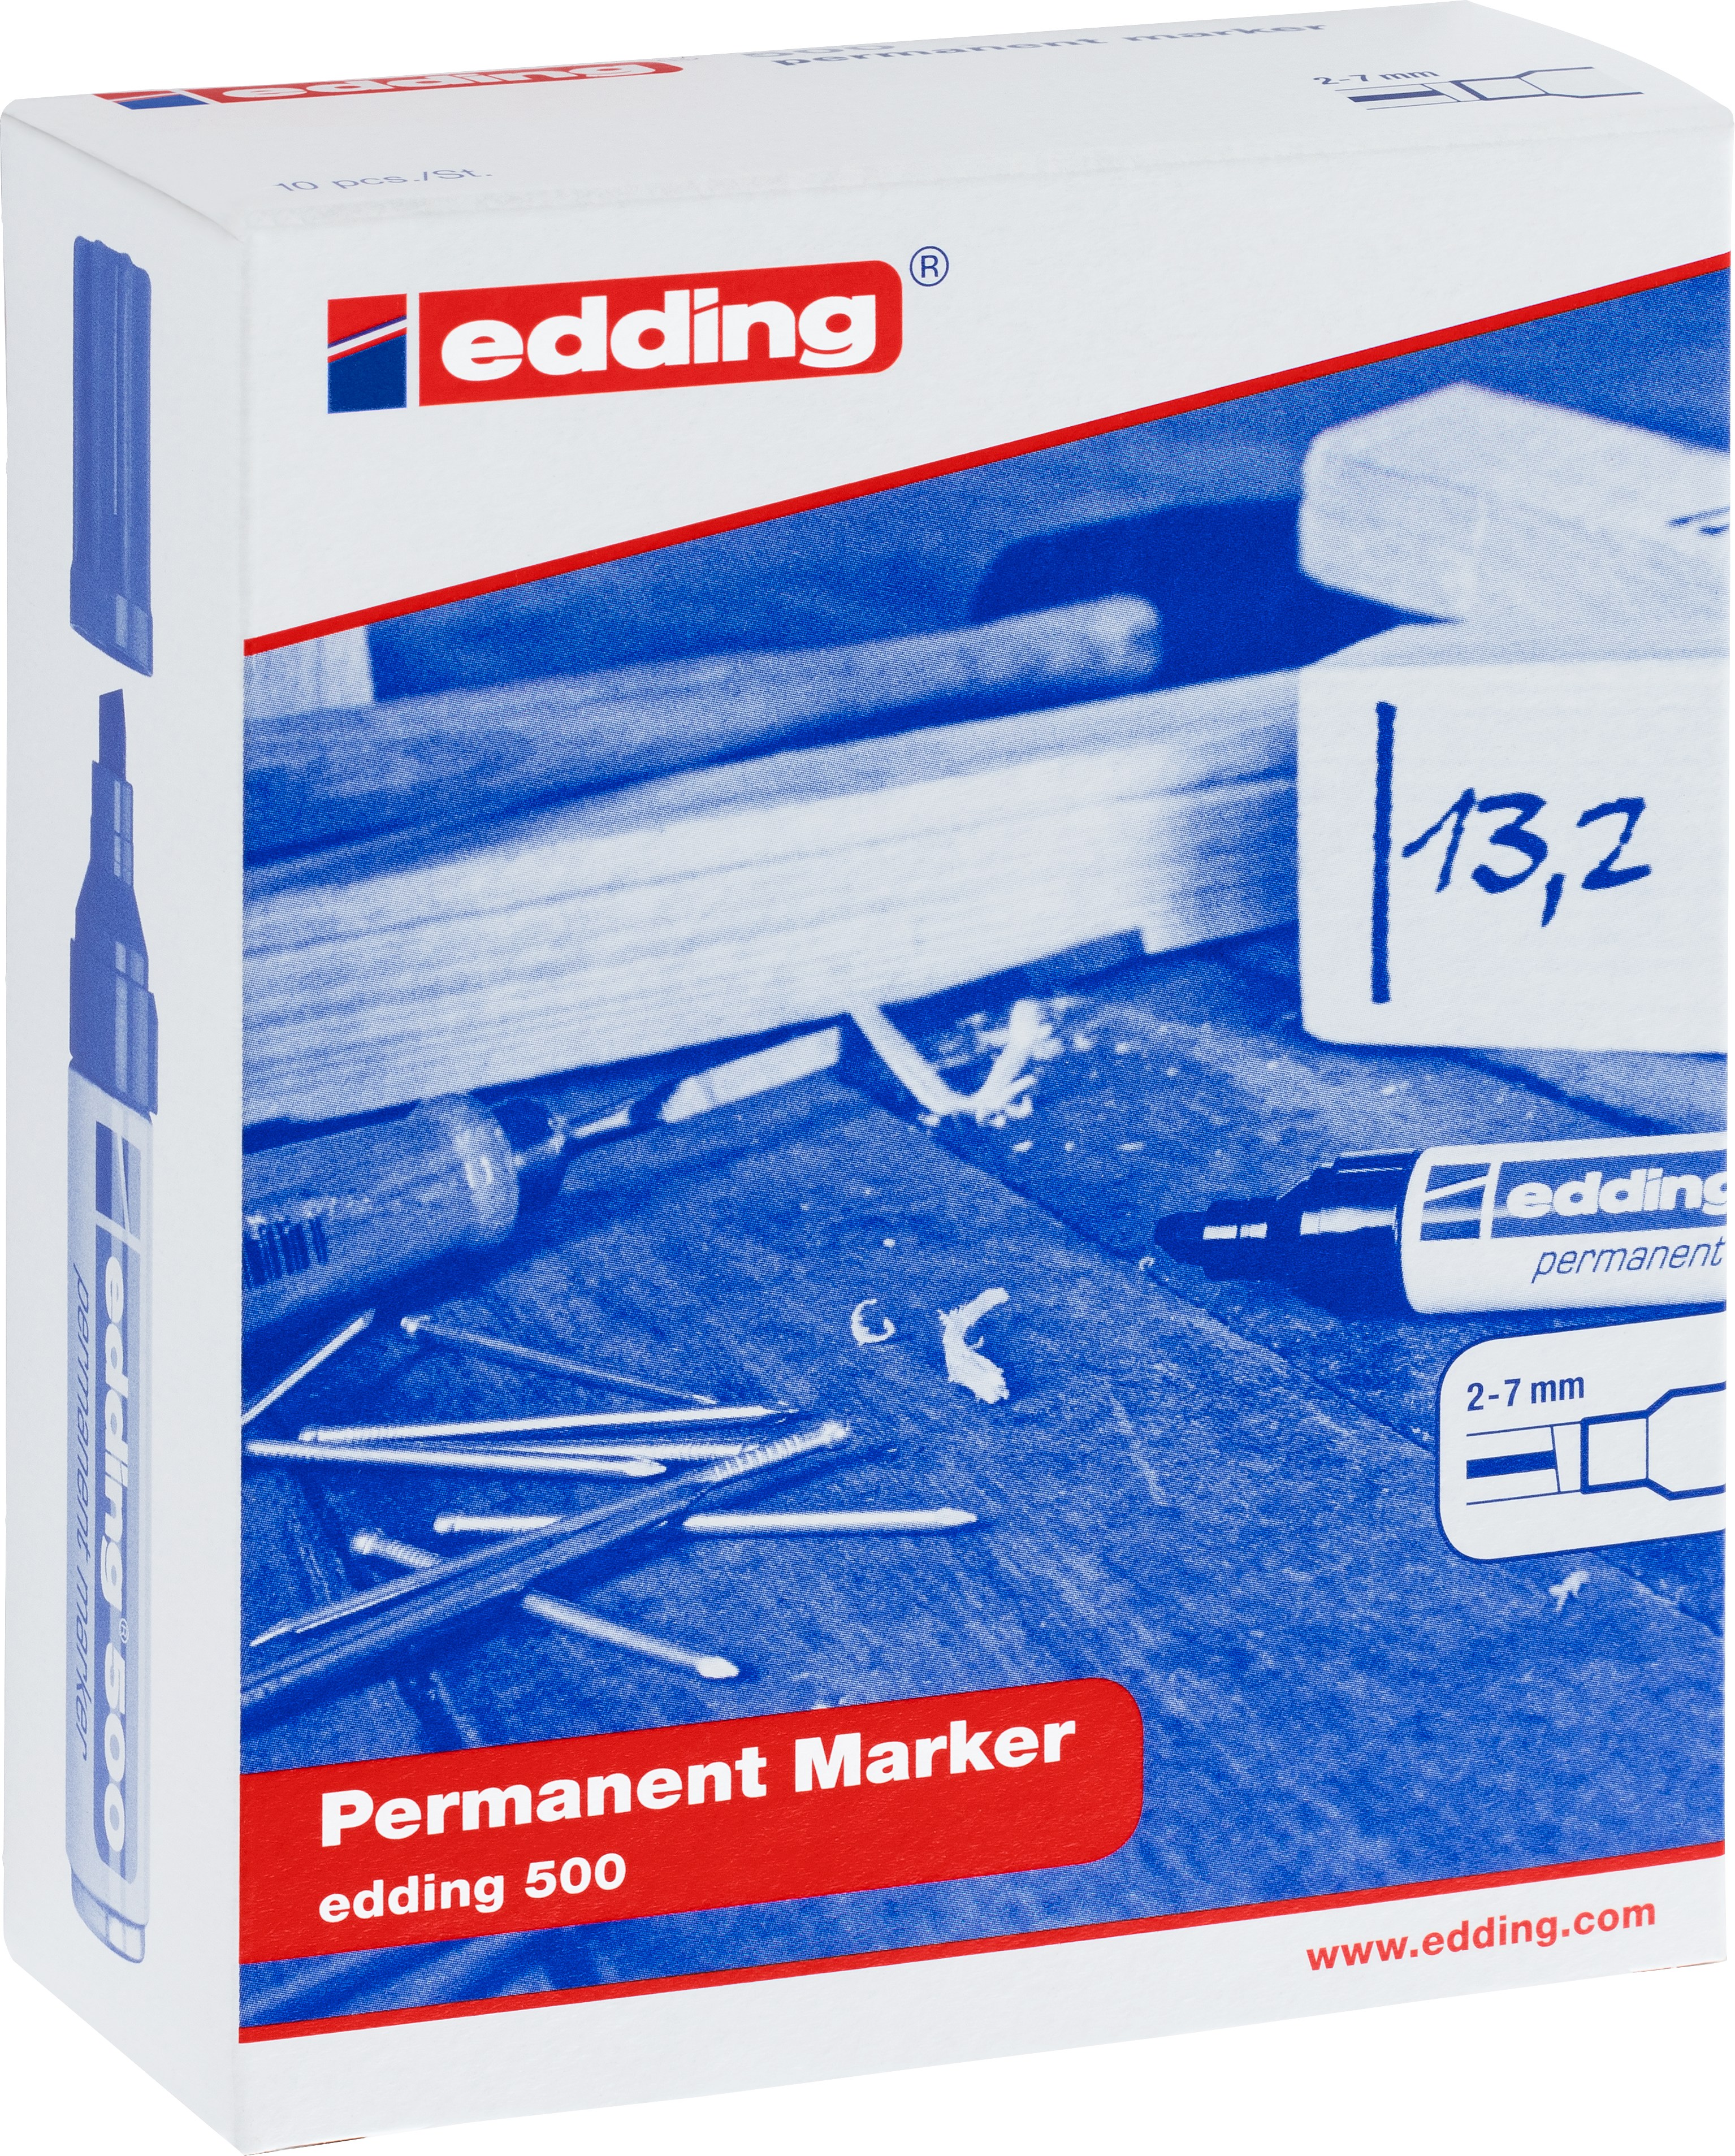 EDDING Permanent Marker 500 2-7mm 500-999 10 pcs., étui